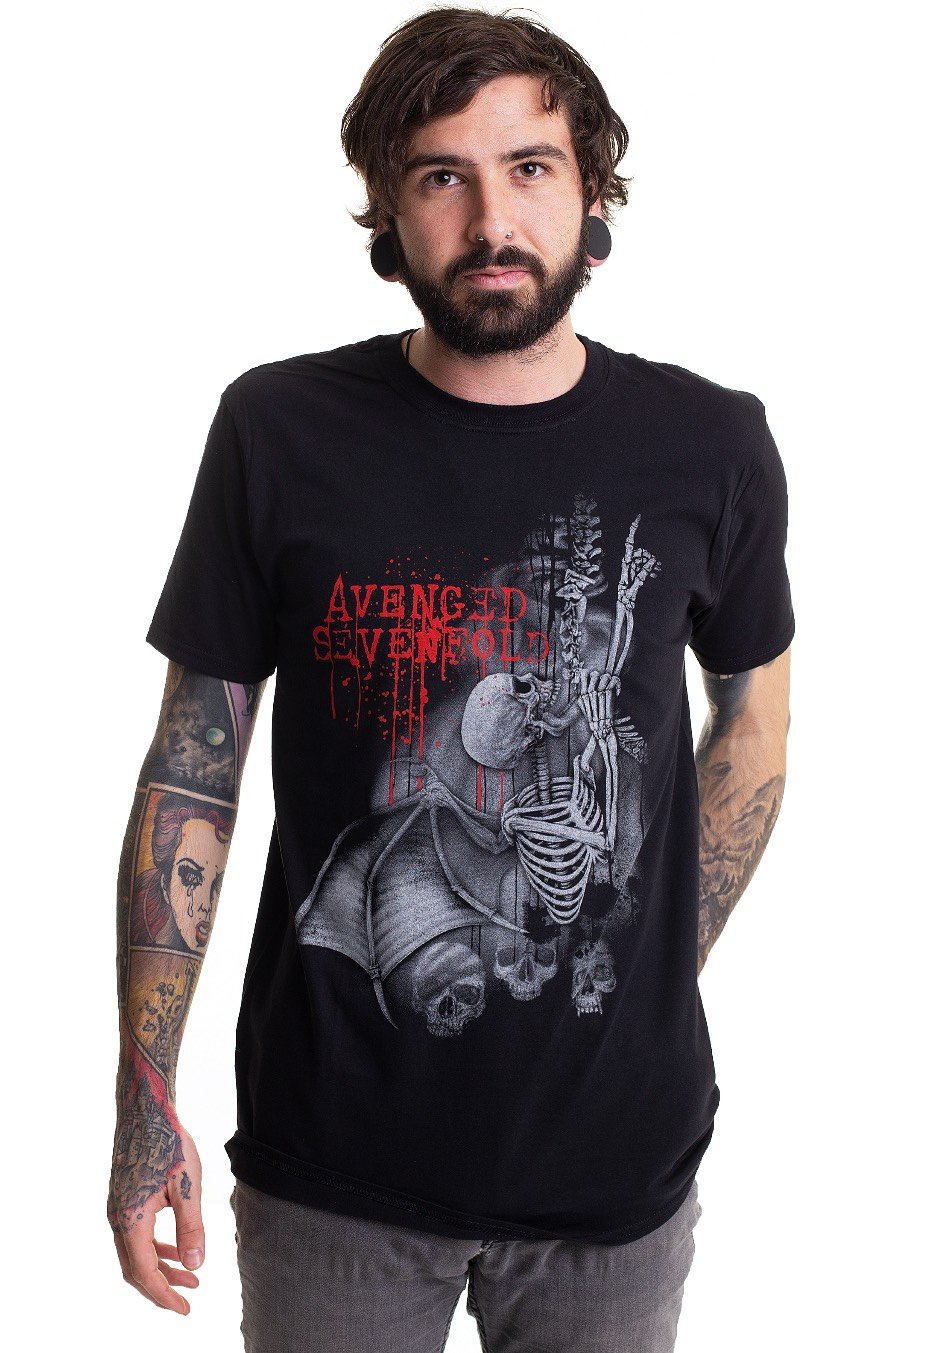 Avenged Sevenfold - Spine Climber - T-Shirt